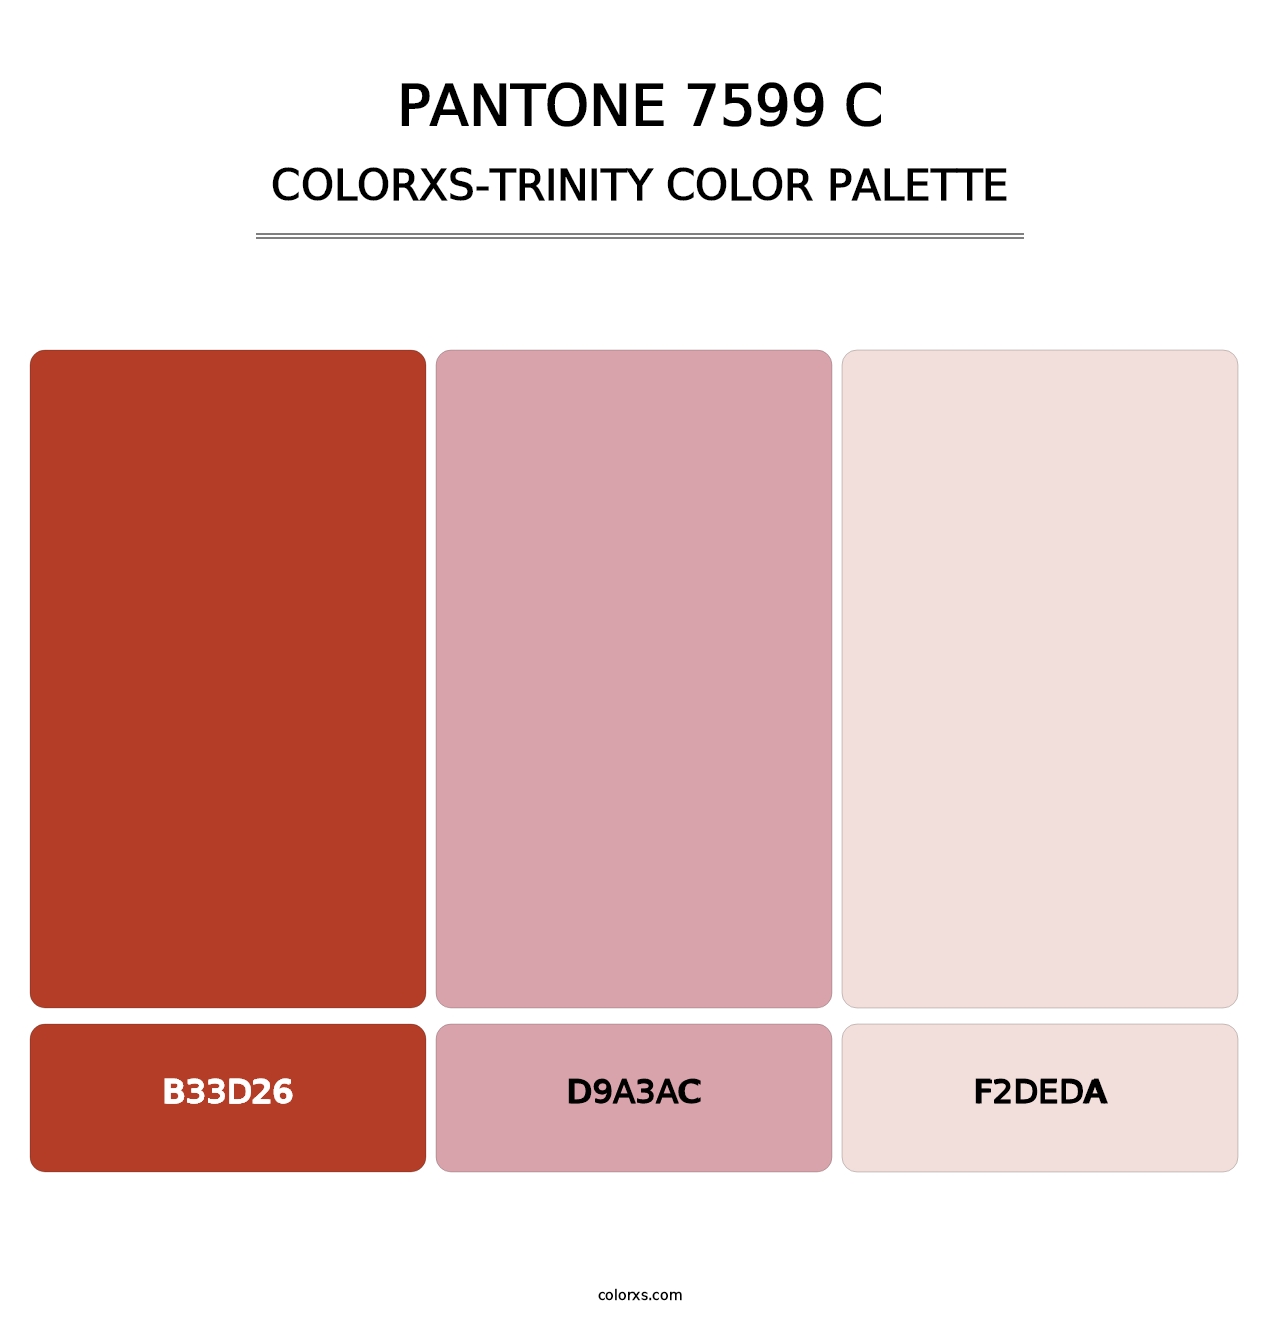 PANTONE 7599 C - Colorxs Trinity Palette